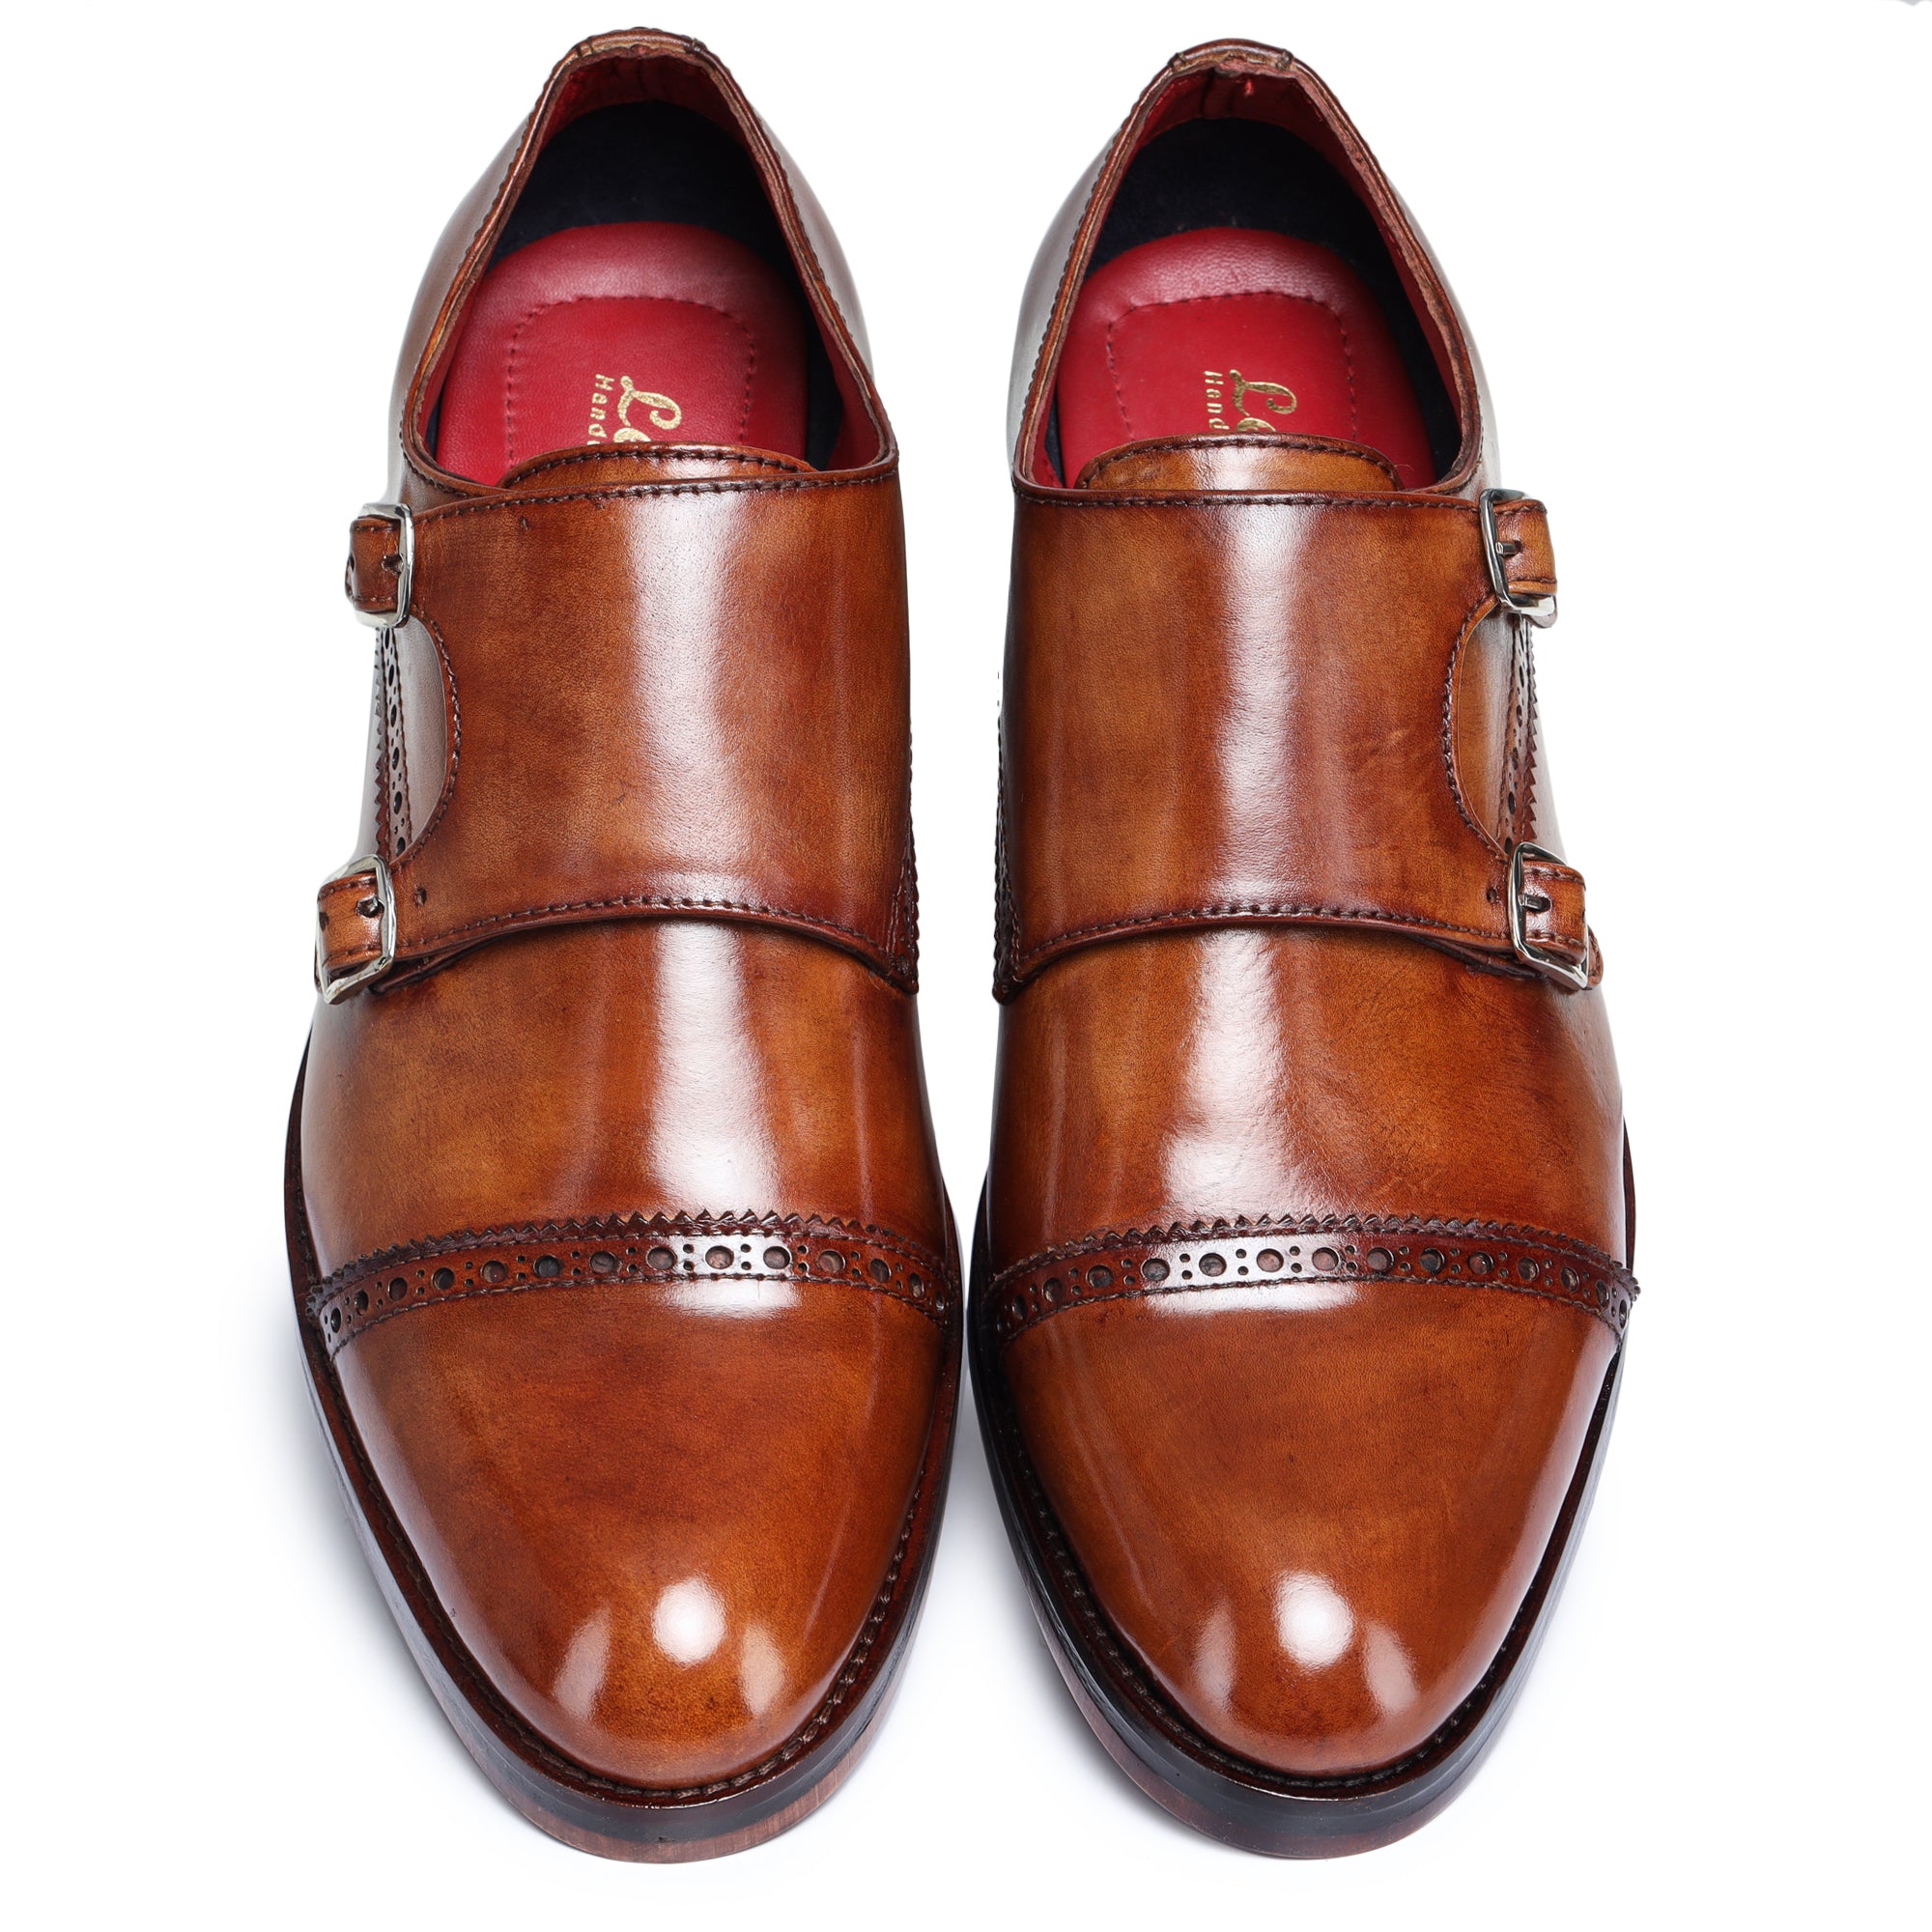 Men's Captoe Double MonkStrap Shoes - Brown by Lethato